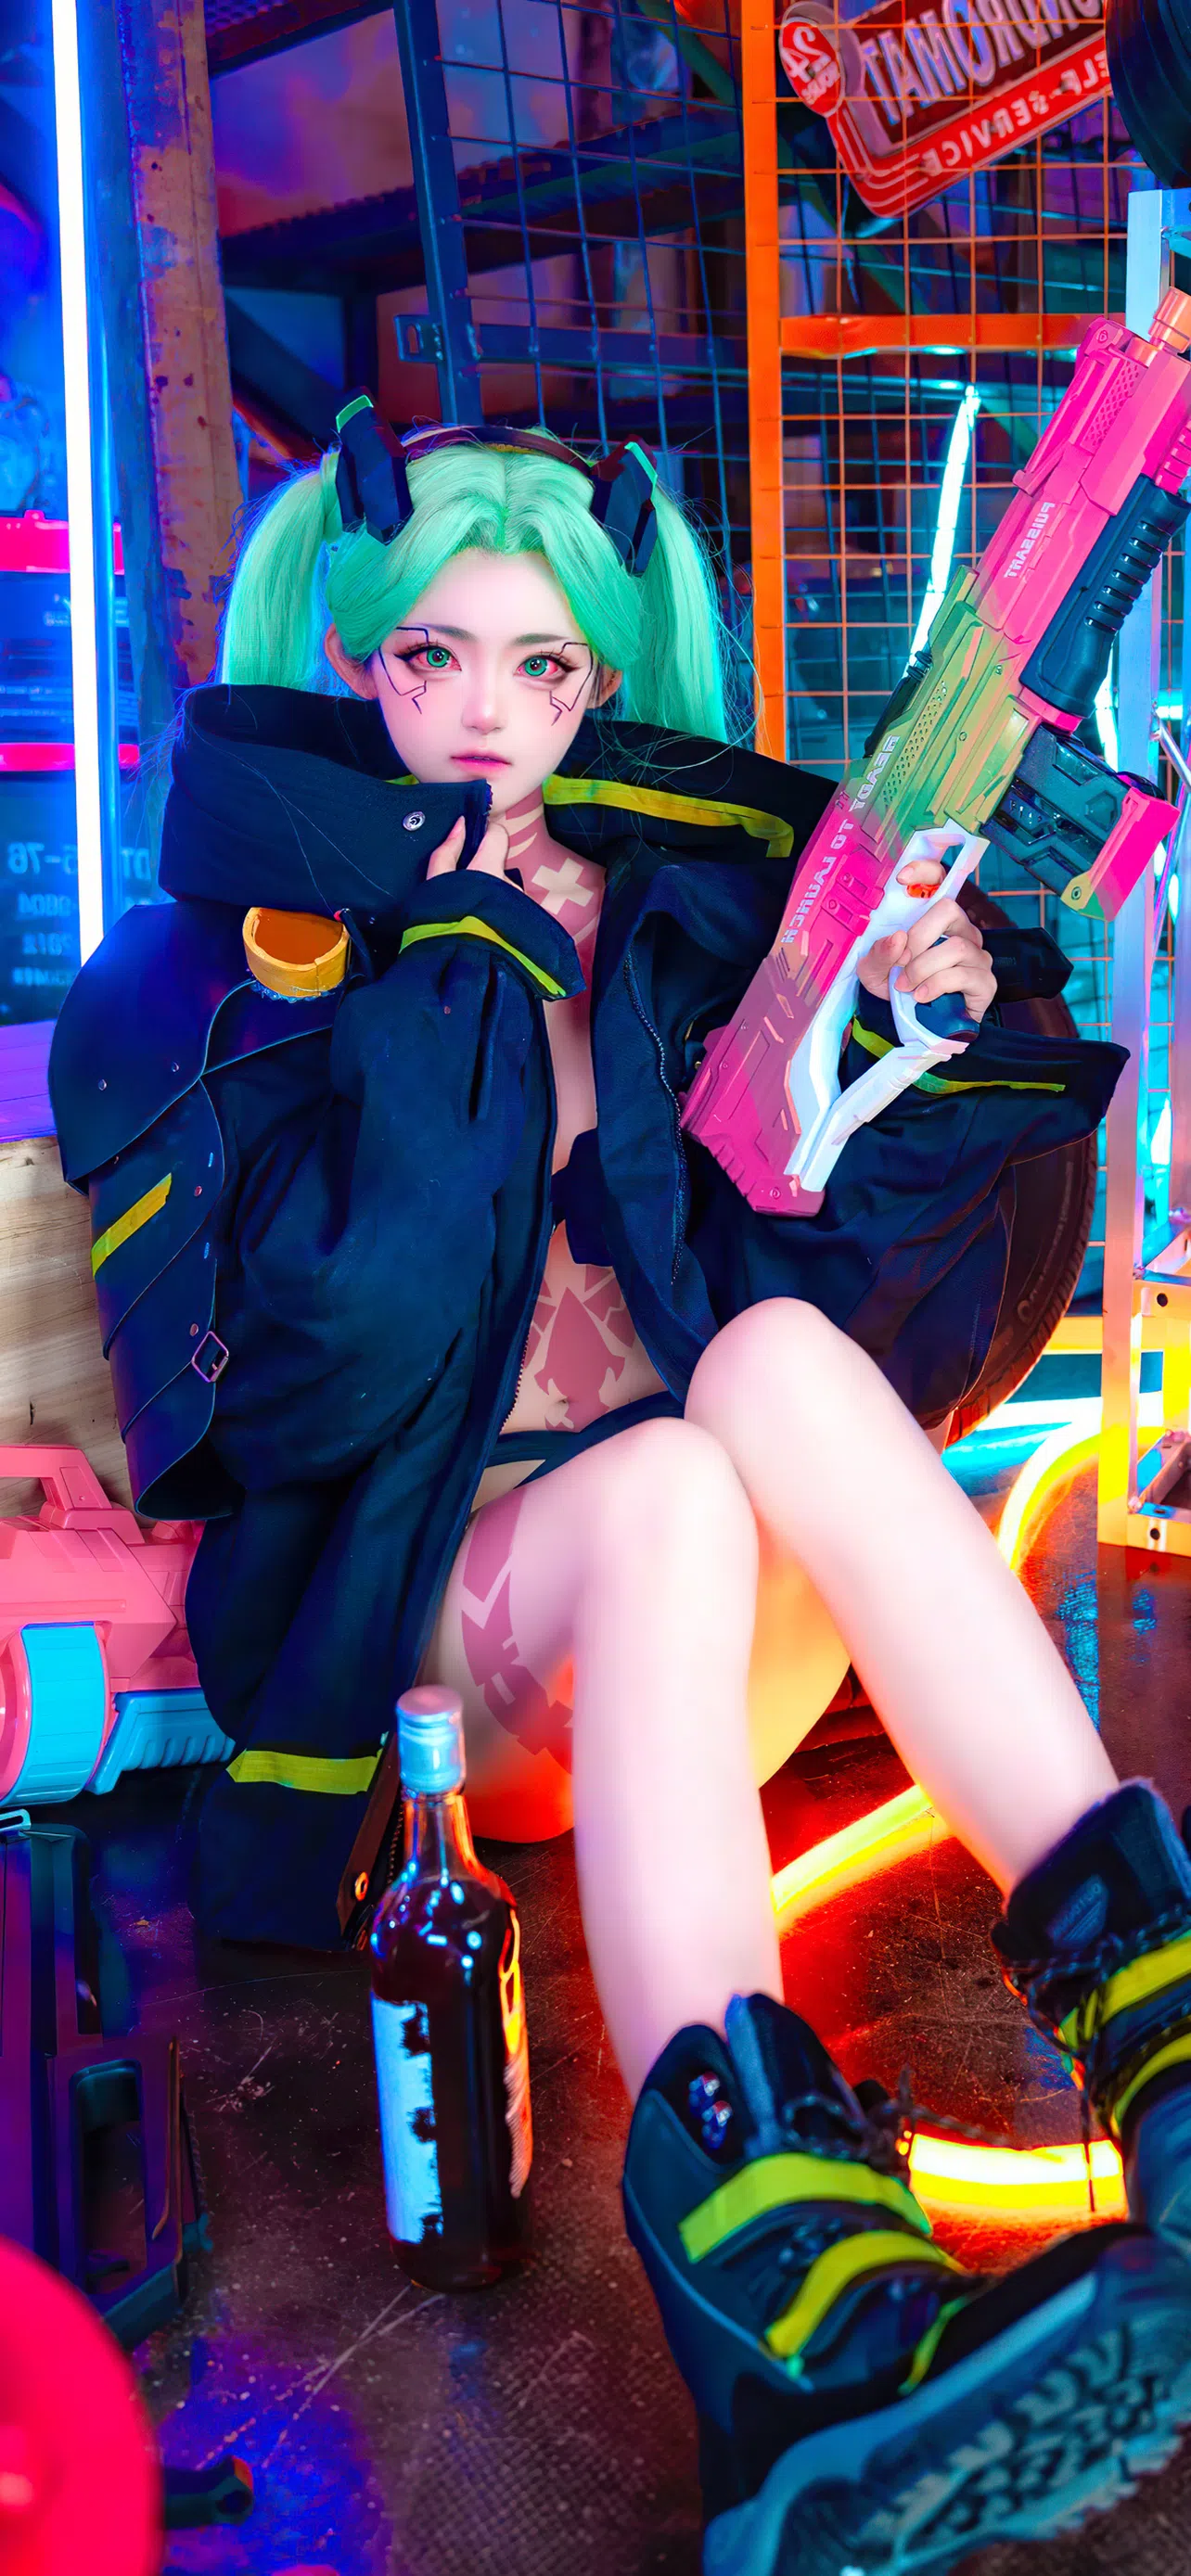 Rebecca (Cyberpunk: Edgerunners) Image by Radjeong #3767650